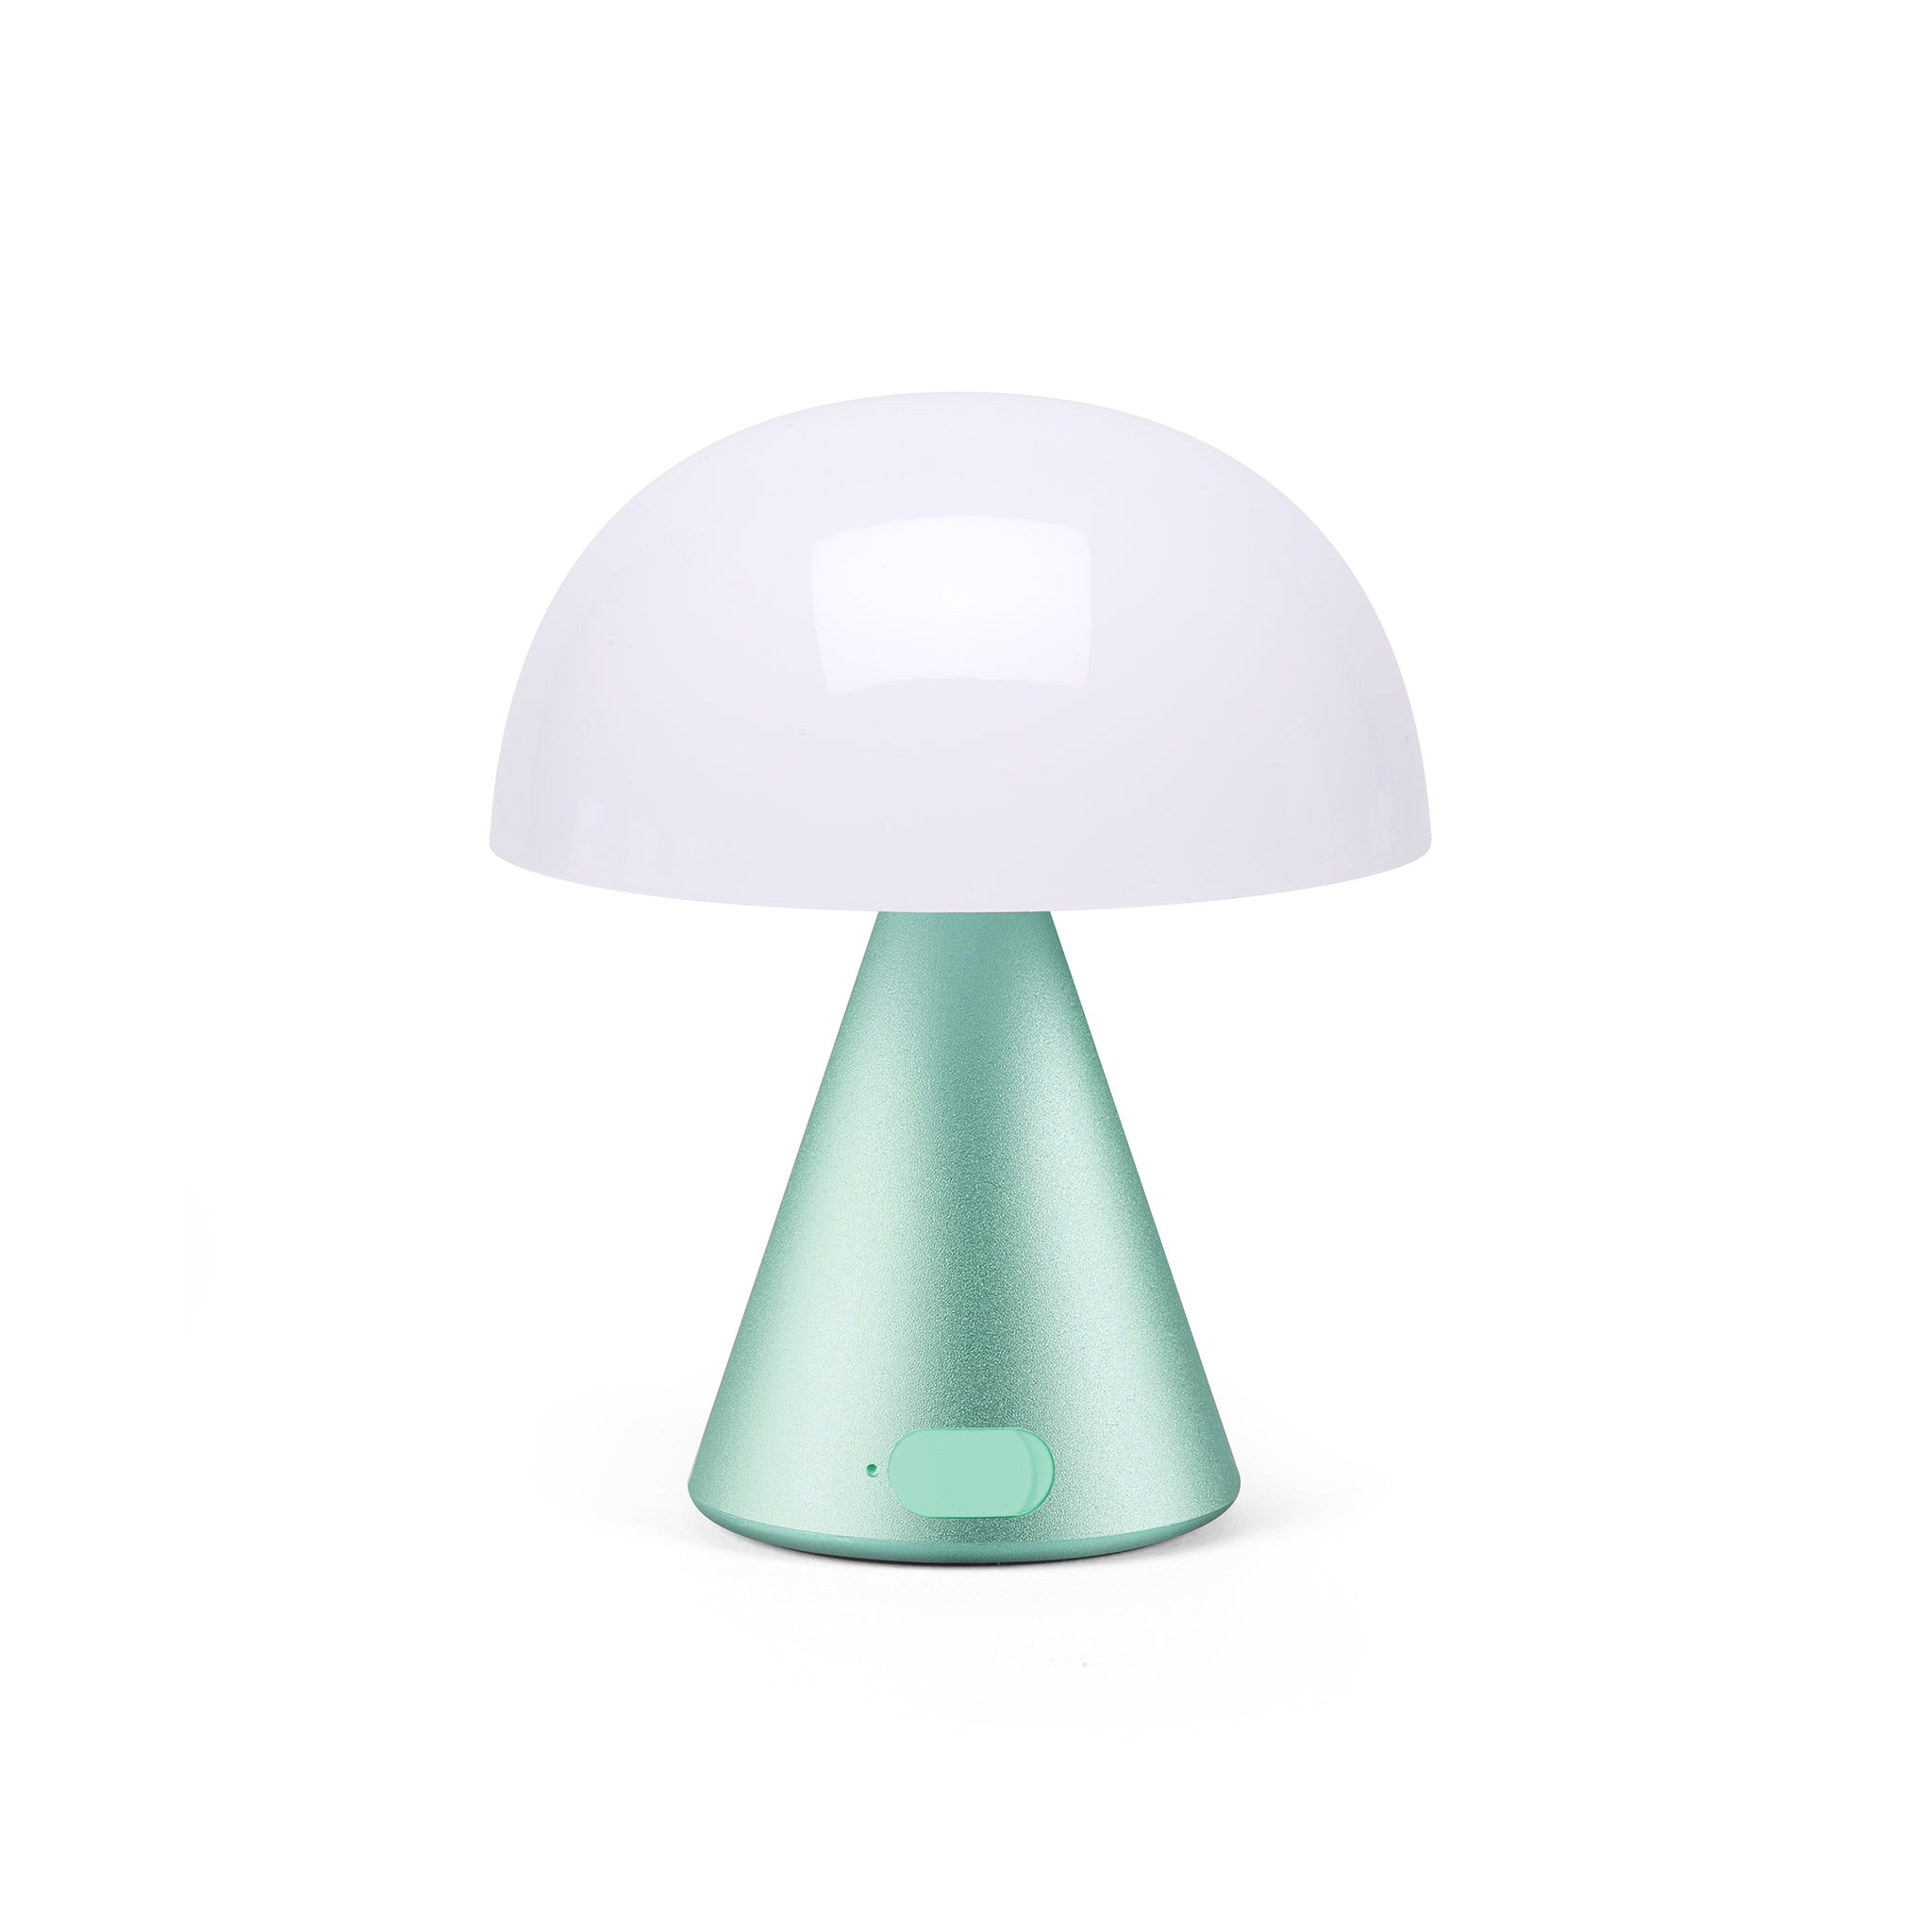 Lexon Mina Medium Mint Groen│LH64M1│Oplaadbare LED-Lamp│vooraanzicht met USB-poort